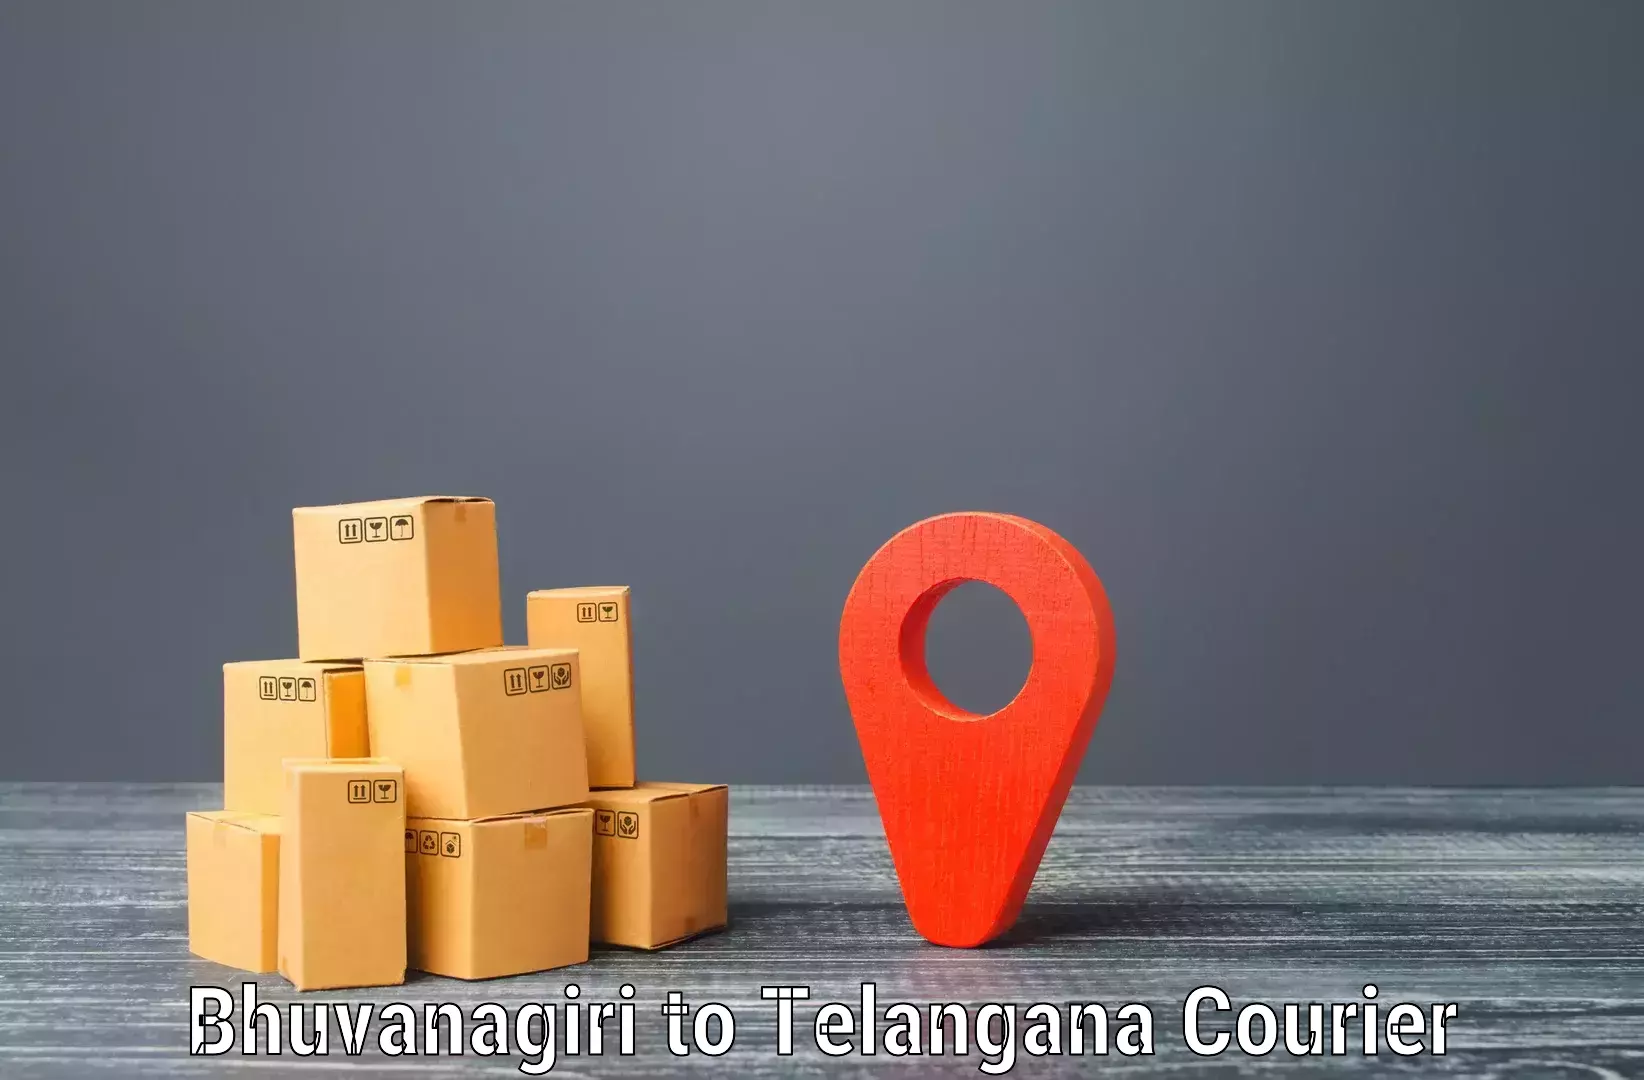 Efficient freight service Bhuvanagiri to Madgulapally